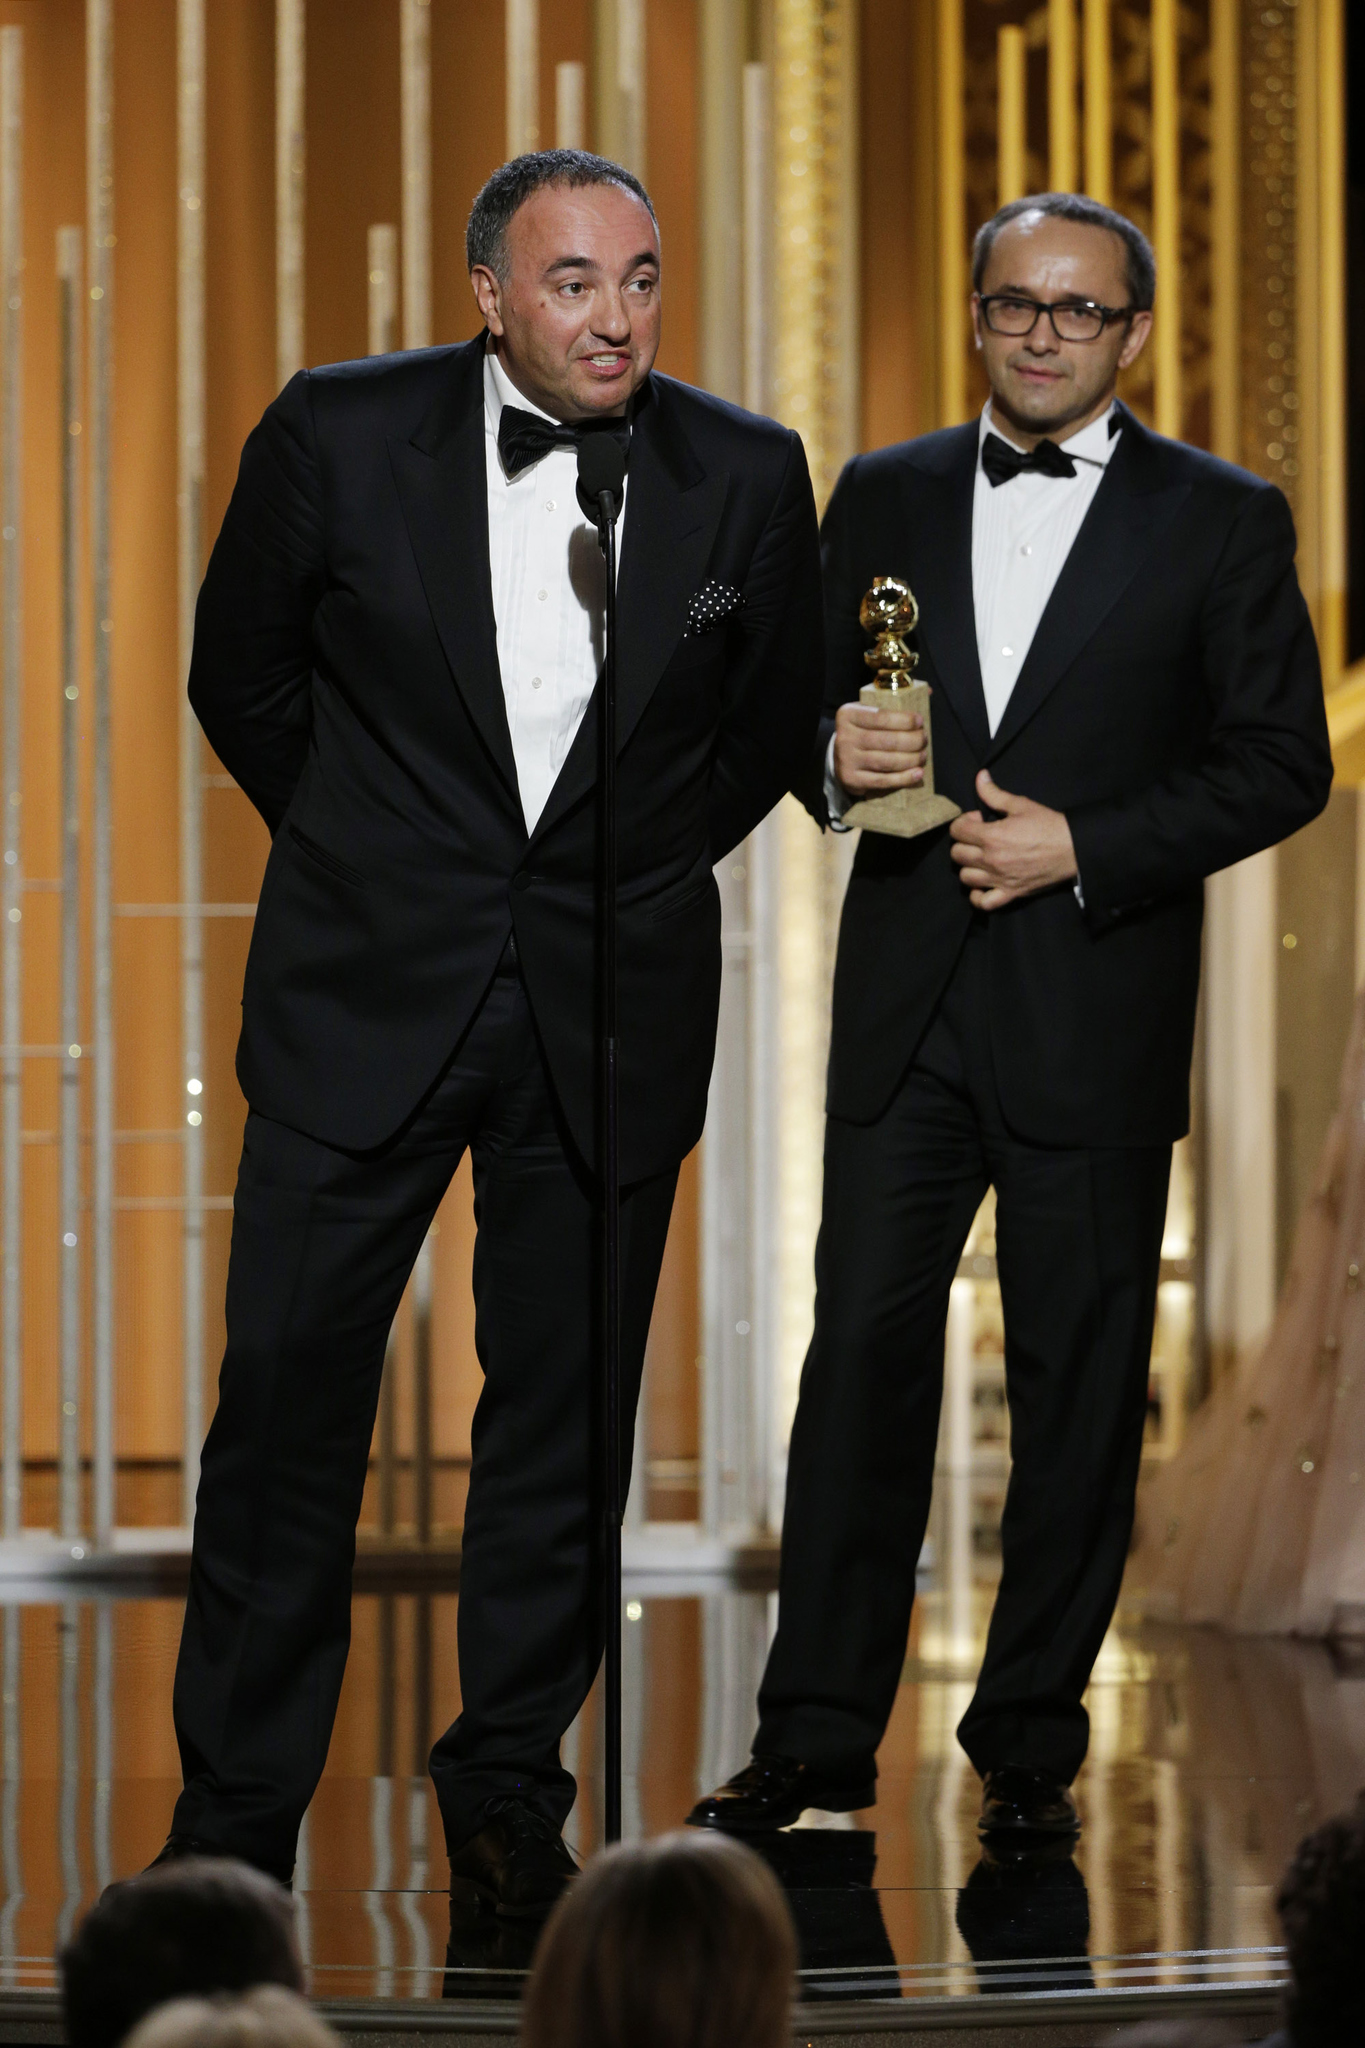 Alexander Rodnyansky and Andrey Zvyagintsev at event of The 72nd Annual Golden Globe Awards (2015)